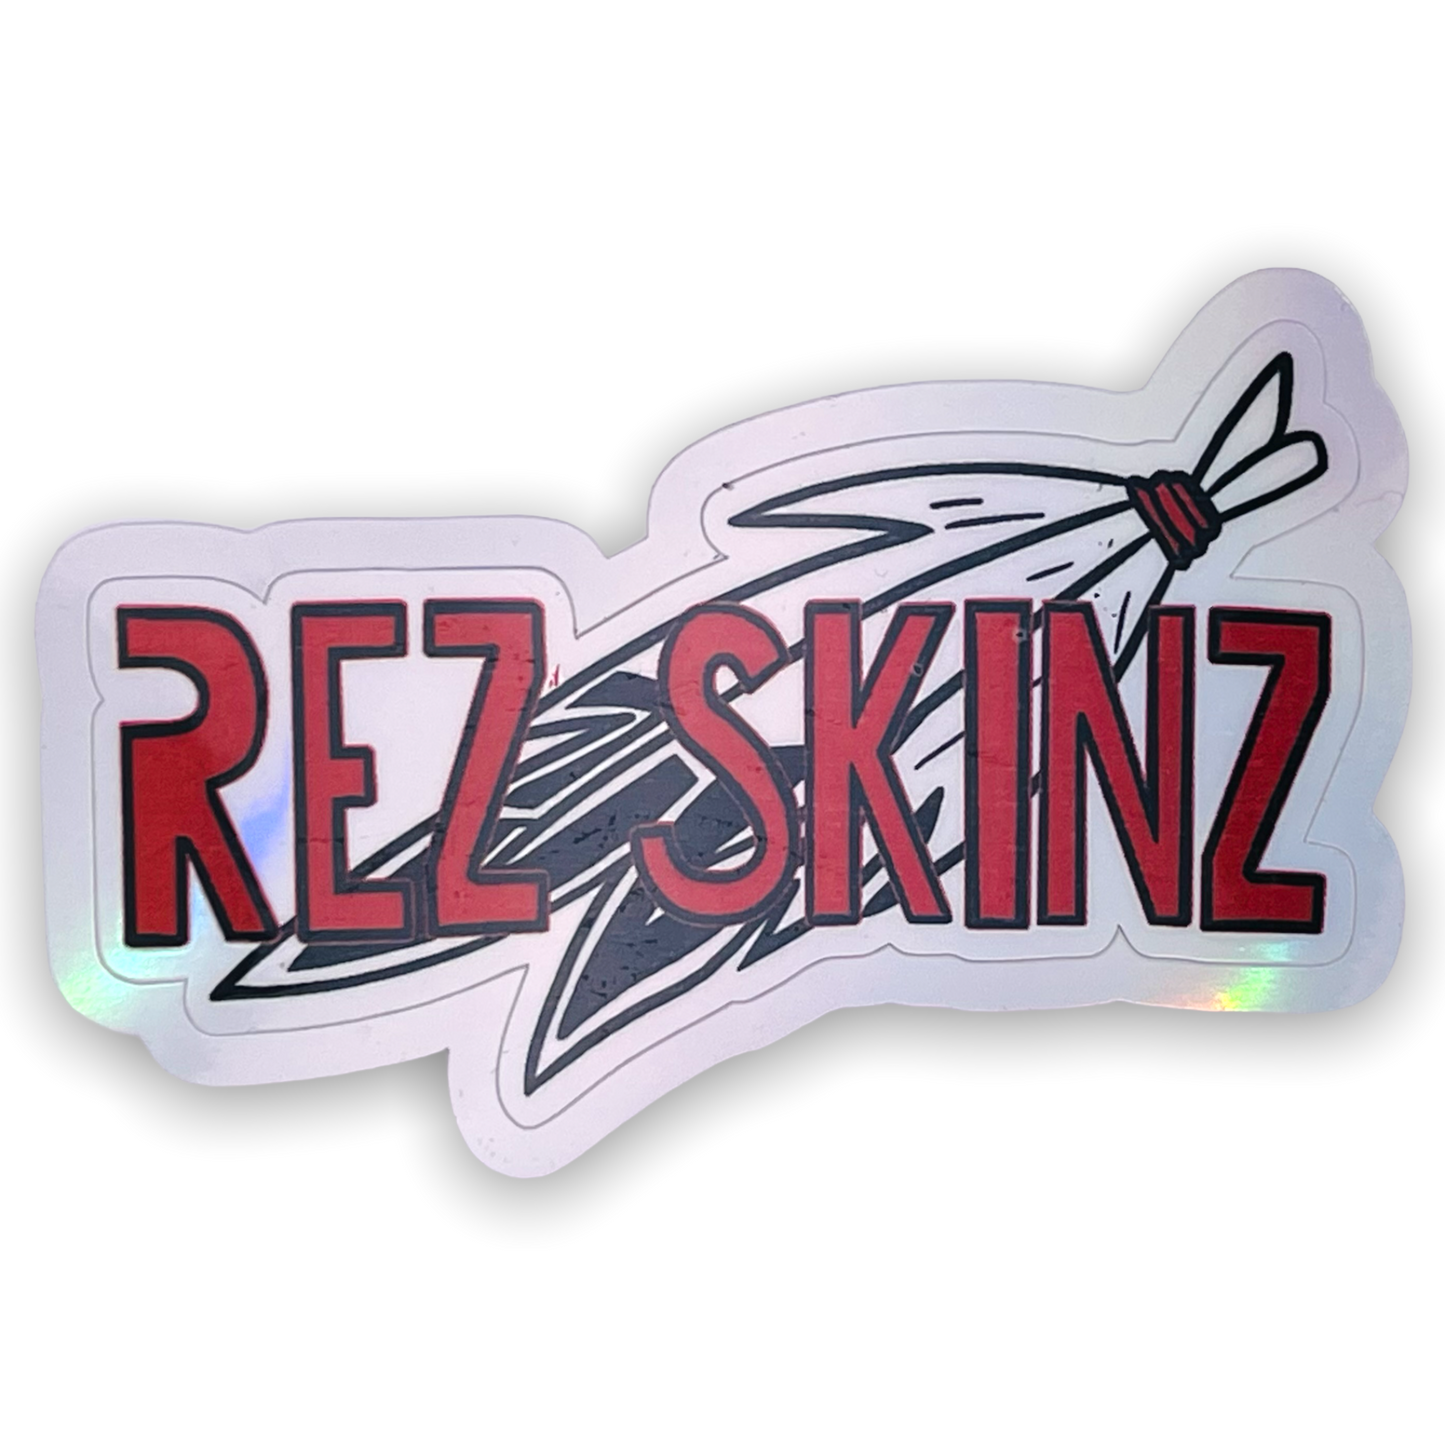 Rez Skinz Holographic Sticker